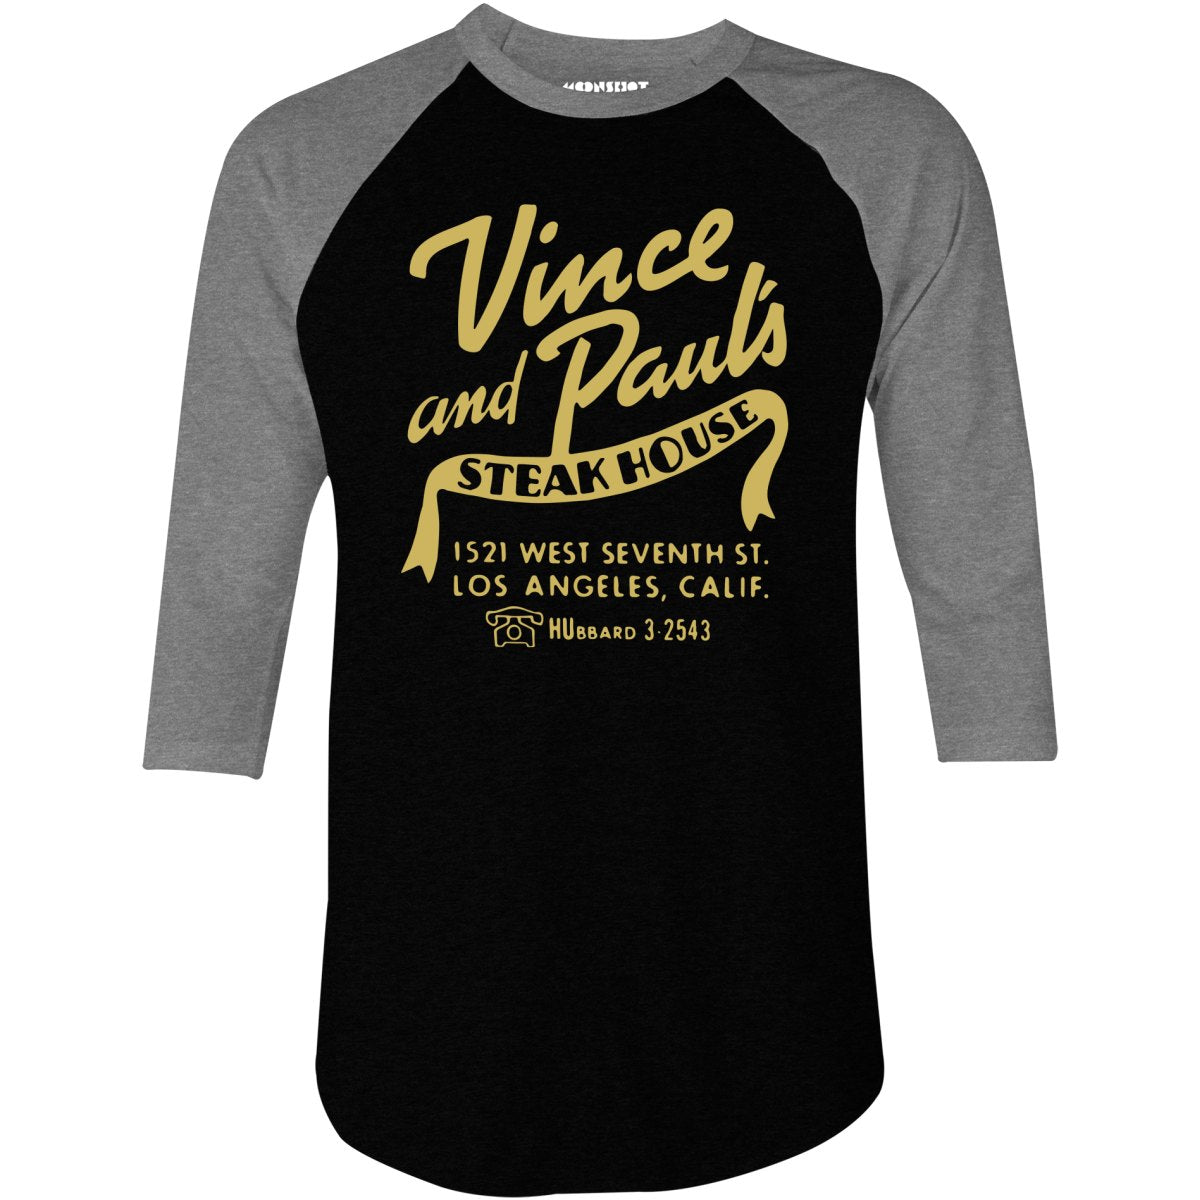 Vince and Paul's Steakhouse - Los Angeles, CA - Vintage Restaurant - 3/4 Sleeve Raglan T-Shirt